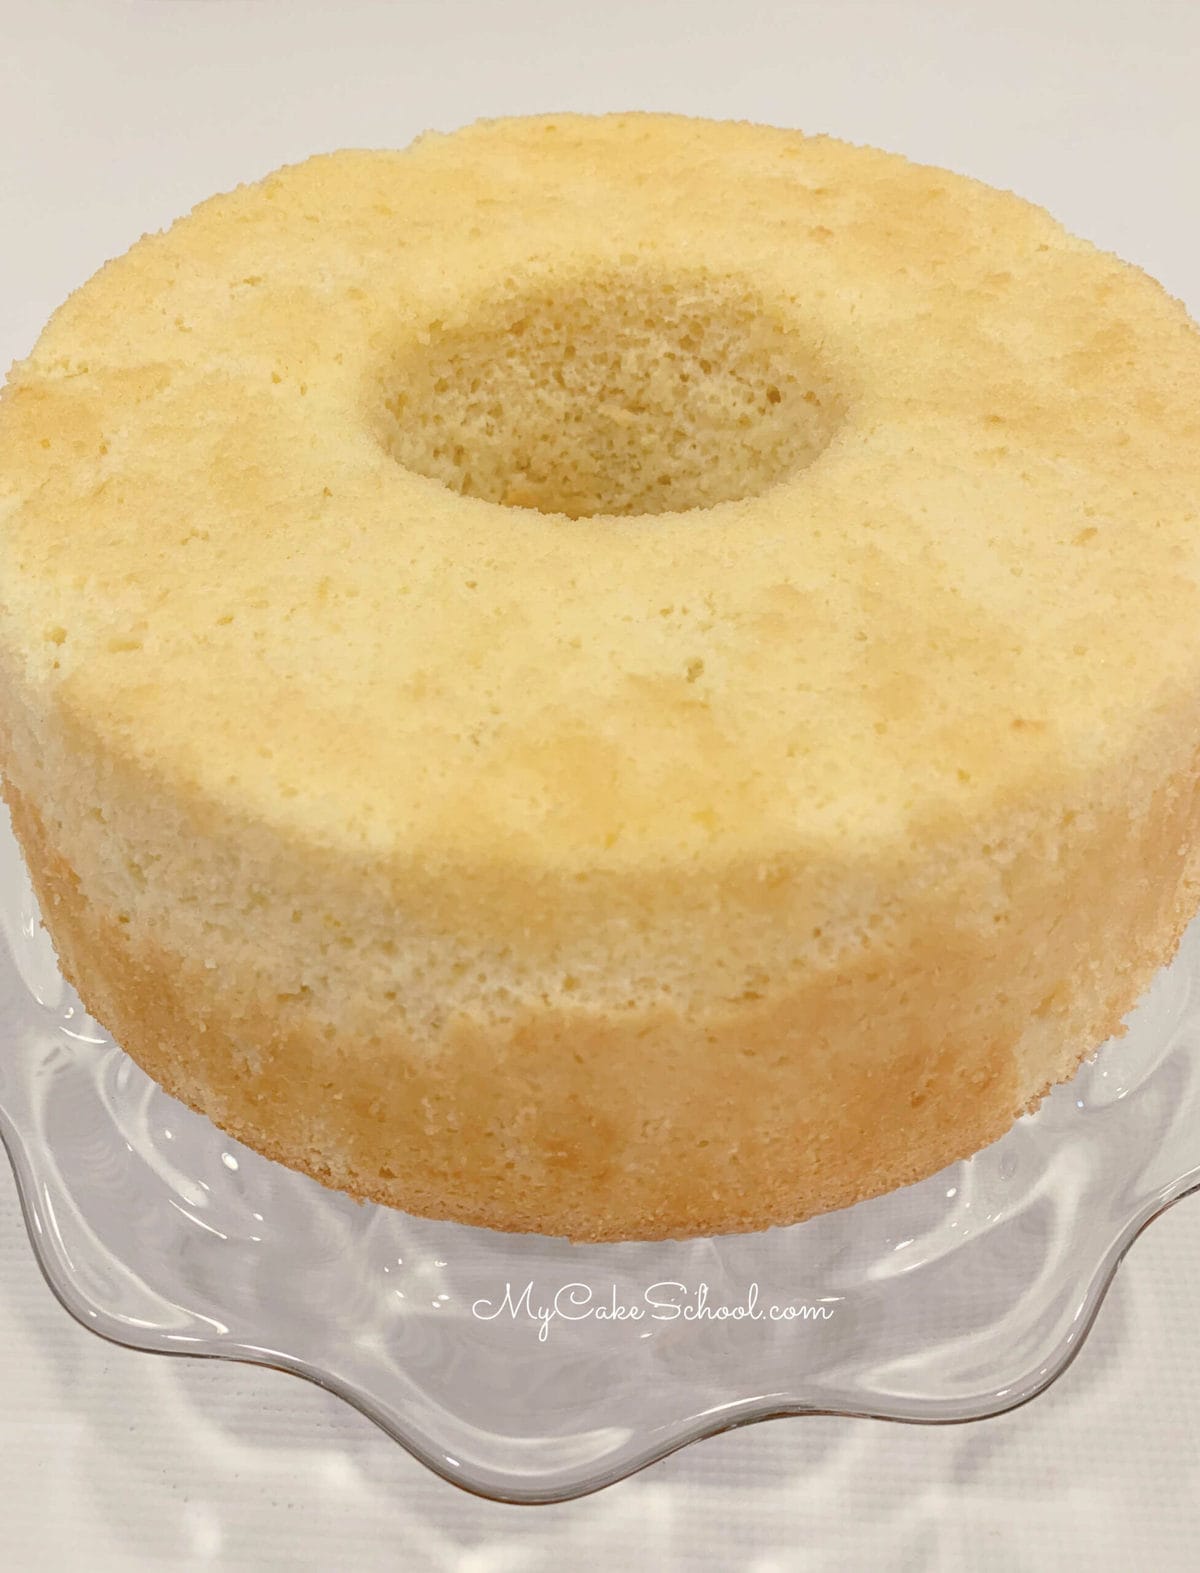 Lemon Chiffon Cake- So moist, light, and airy!